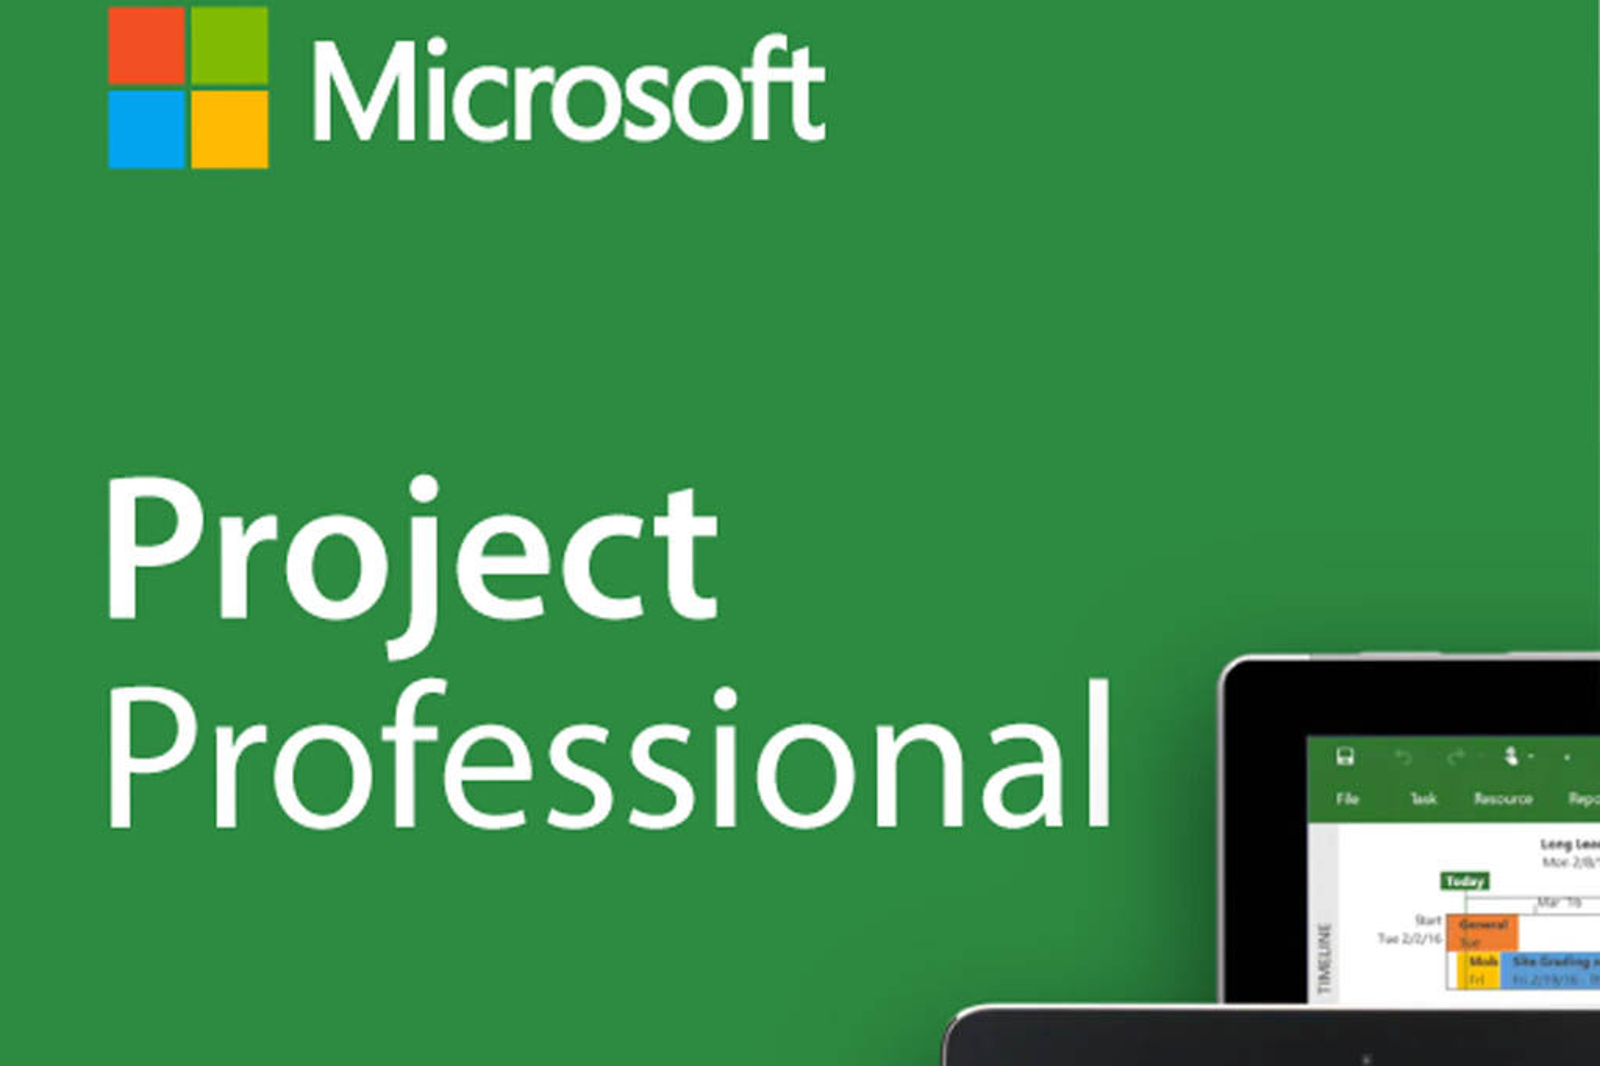 Project описание. Microsoft Project. Microsoft Project professional. Microsoft MS Project. Project профессиональный 2019.